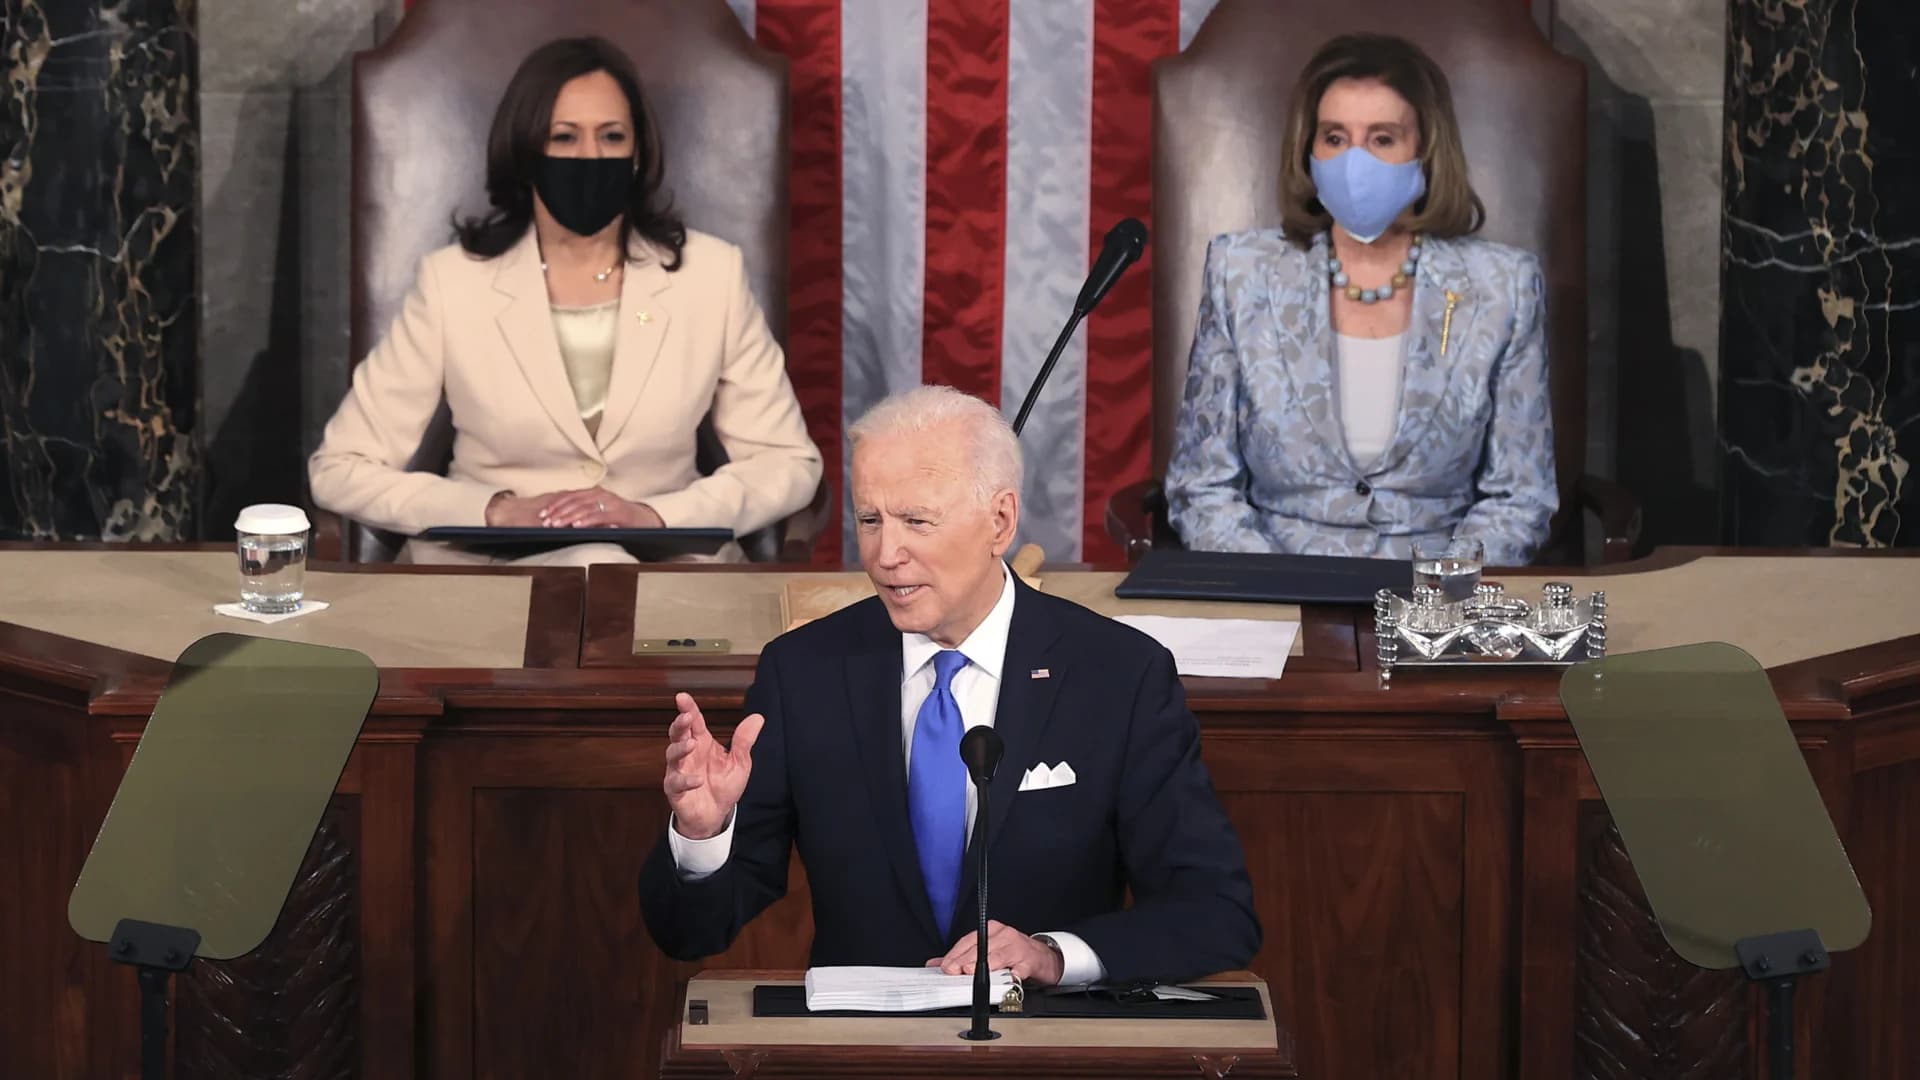 Live Updates: President Biden addresses joint session of Congress